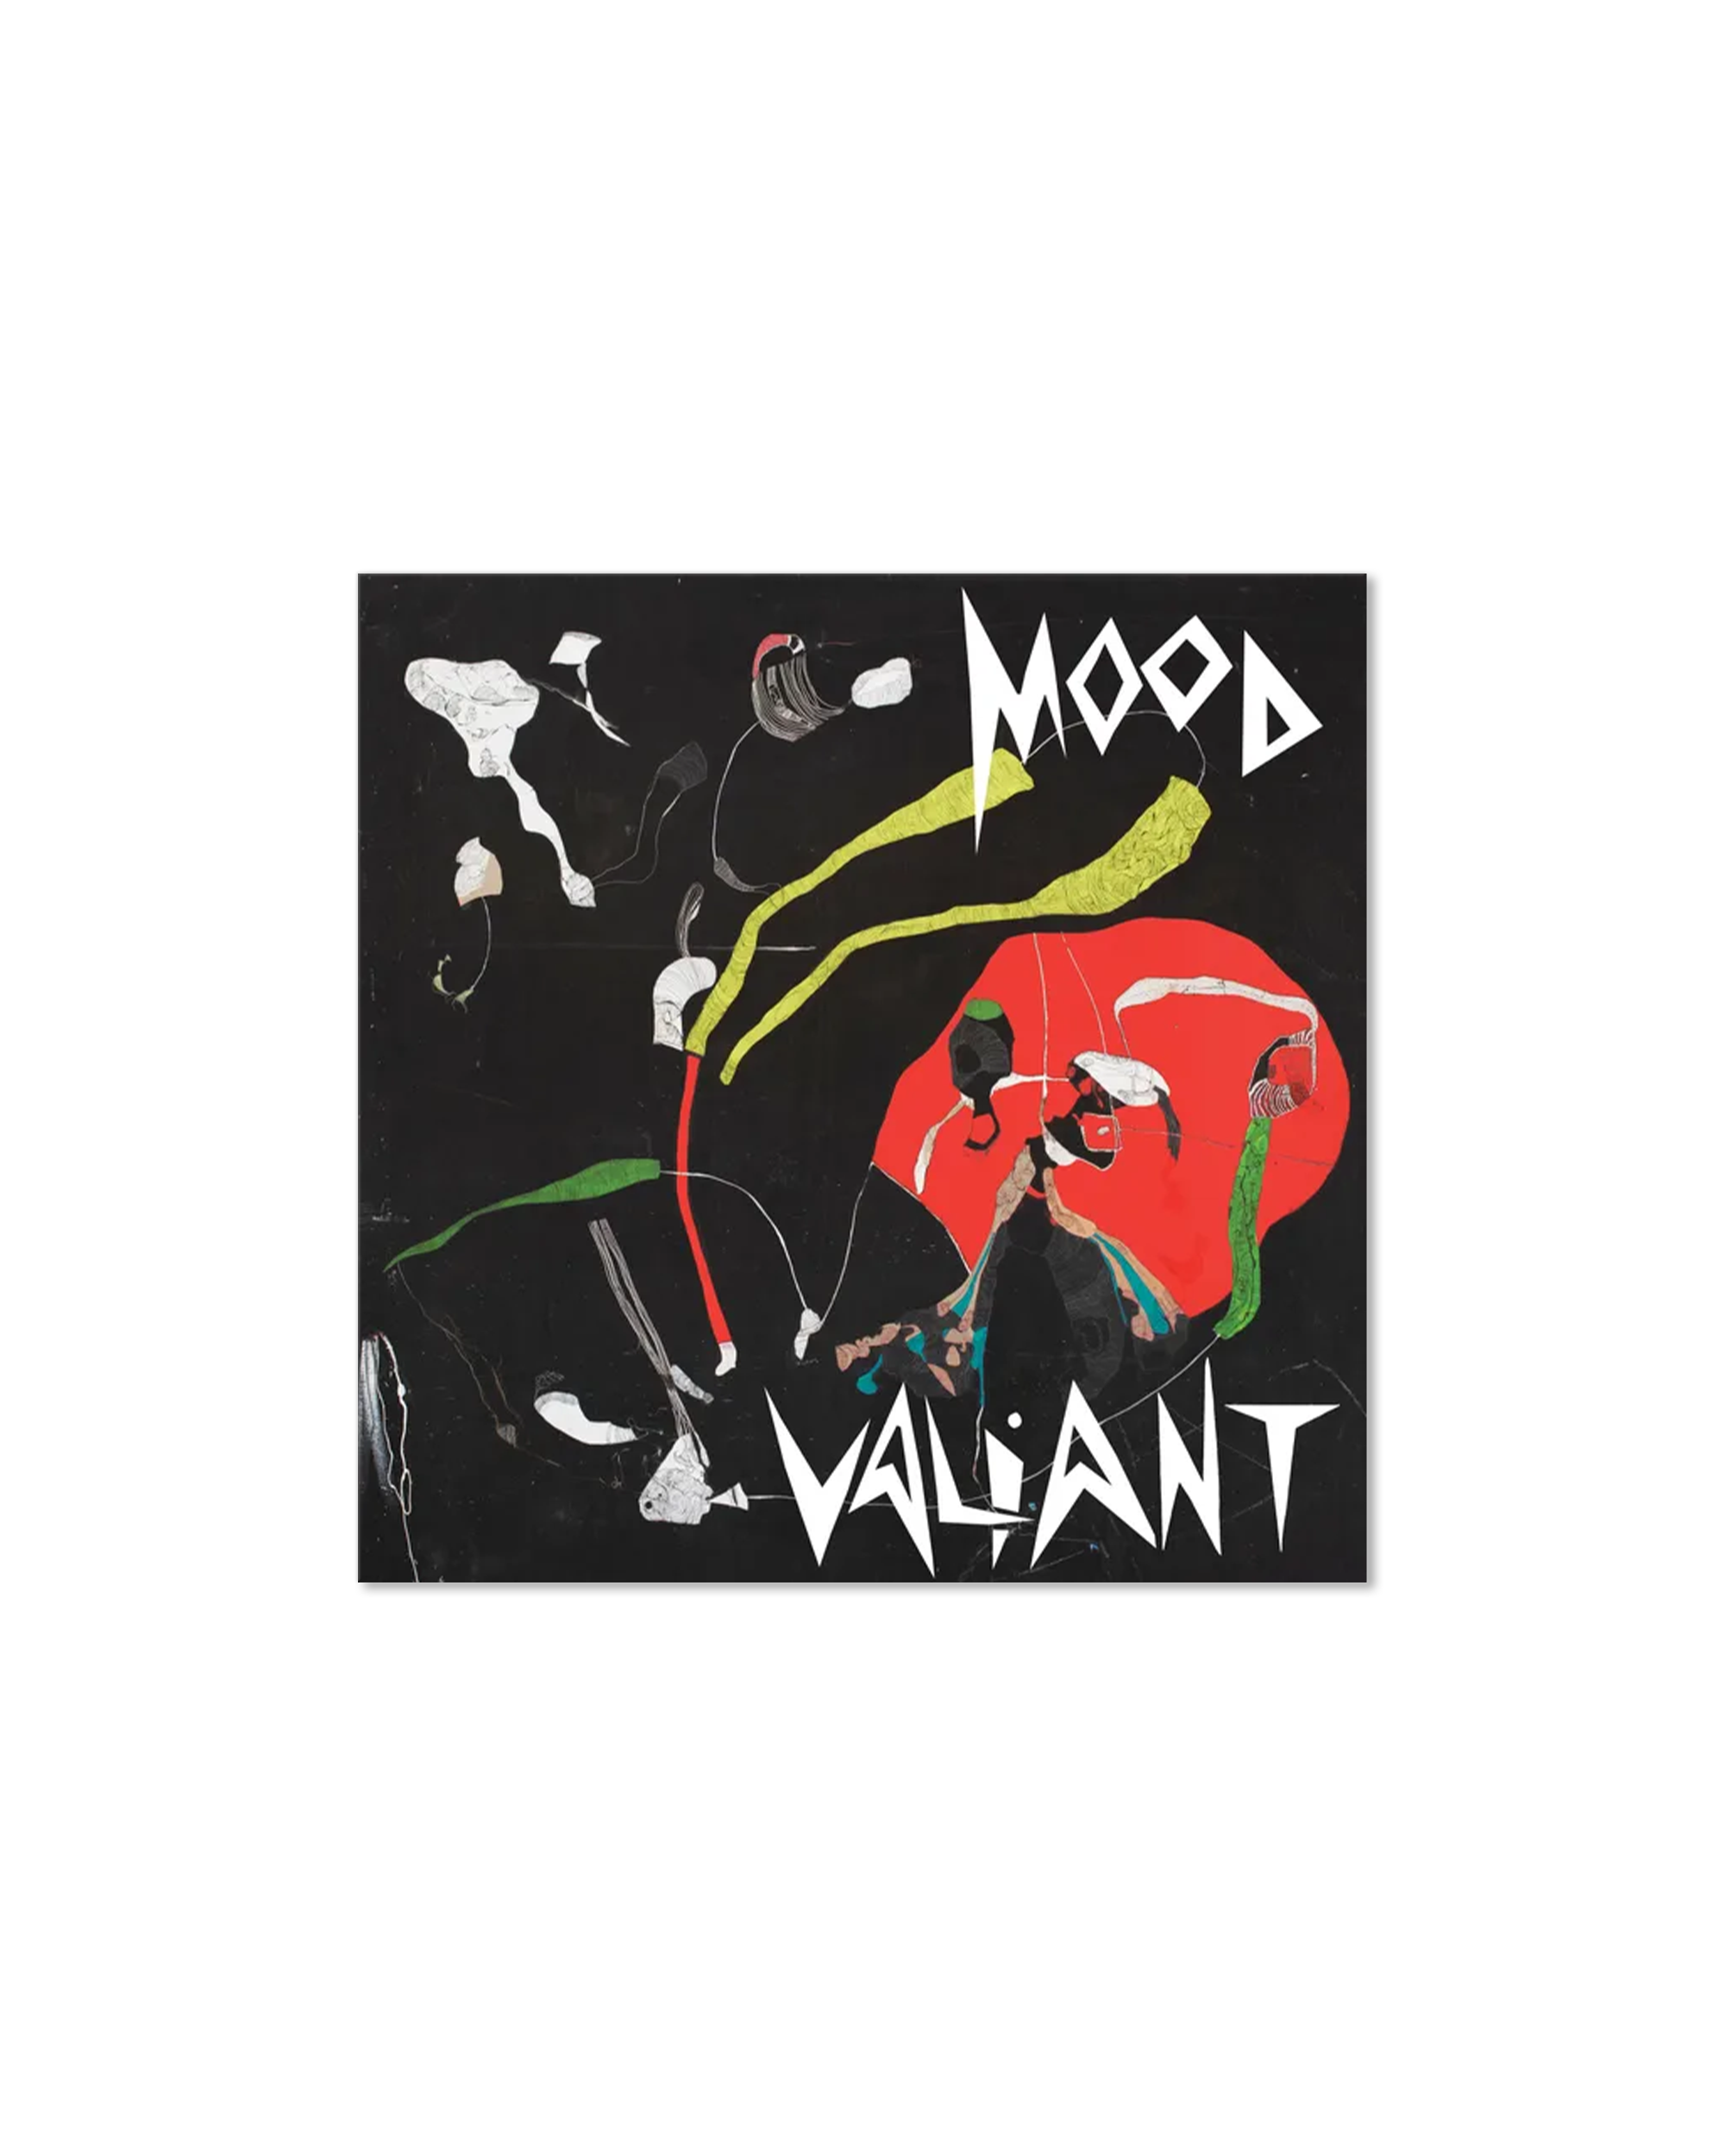 Mood Valiant (Red in Black inkspot indie exclusive)